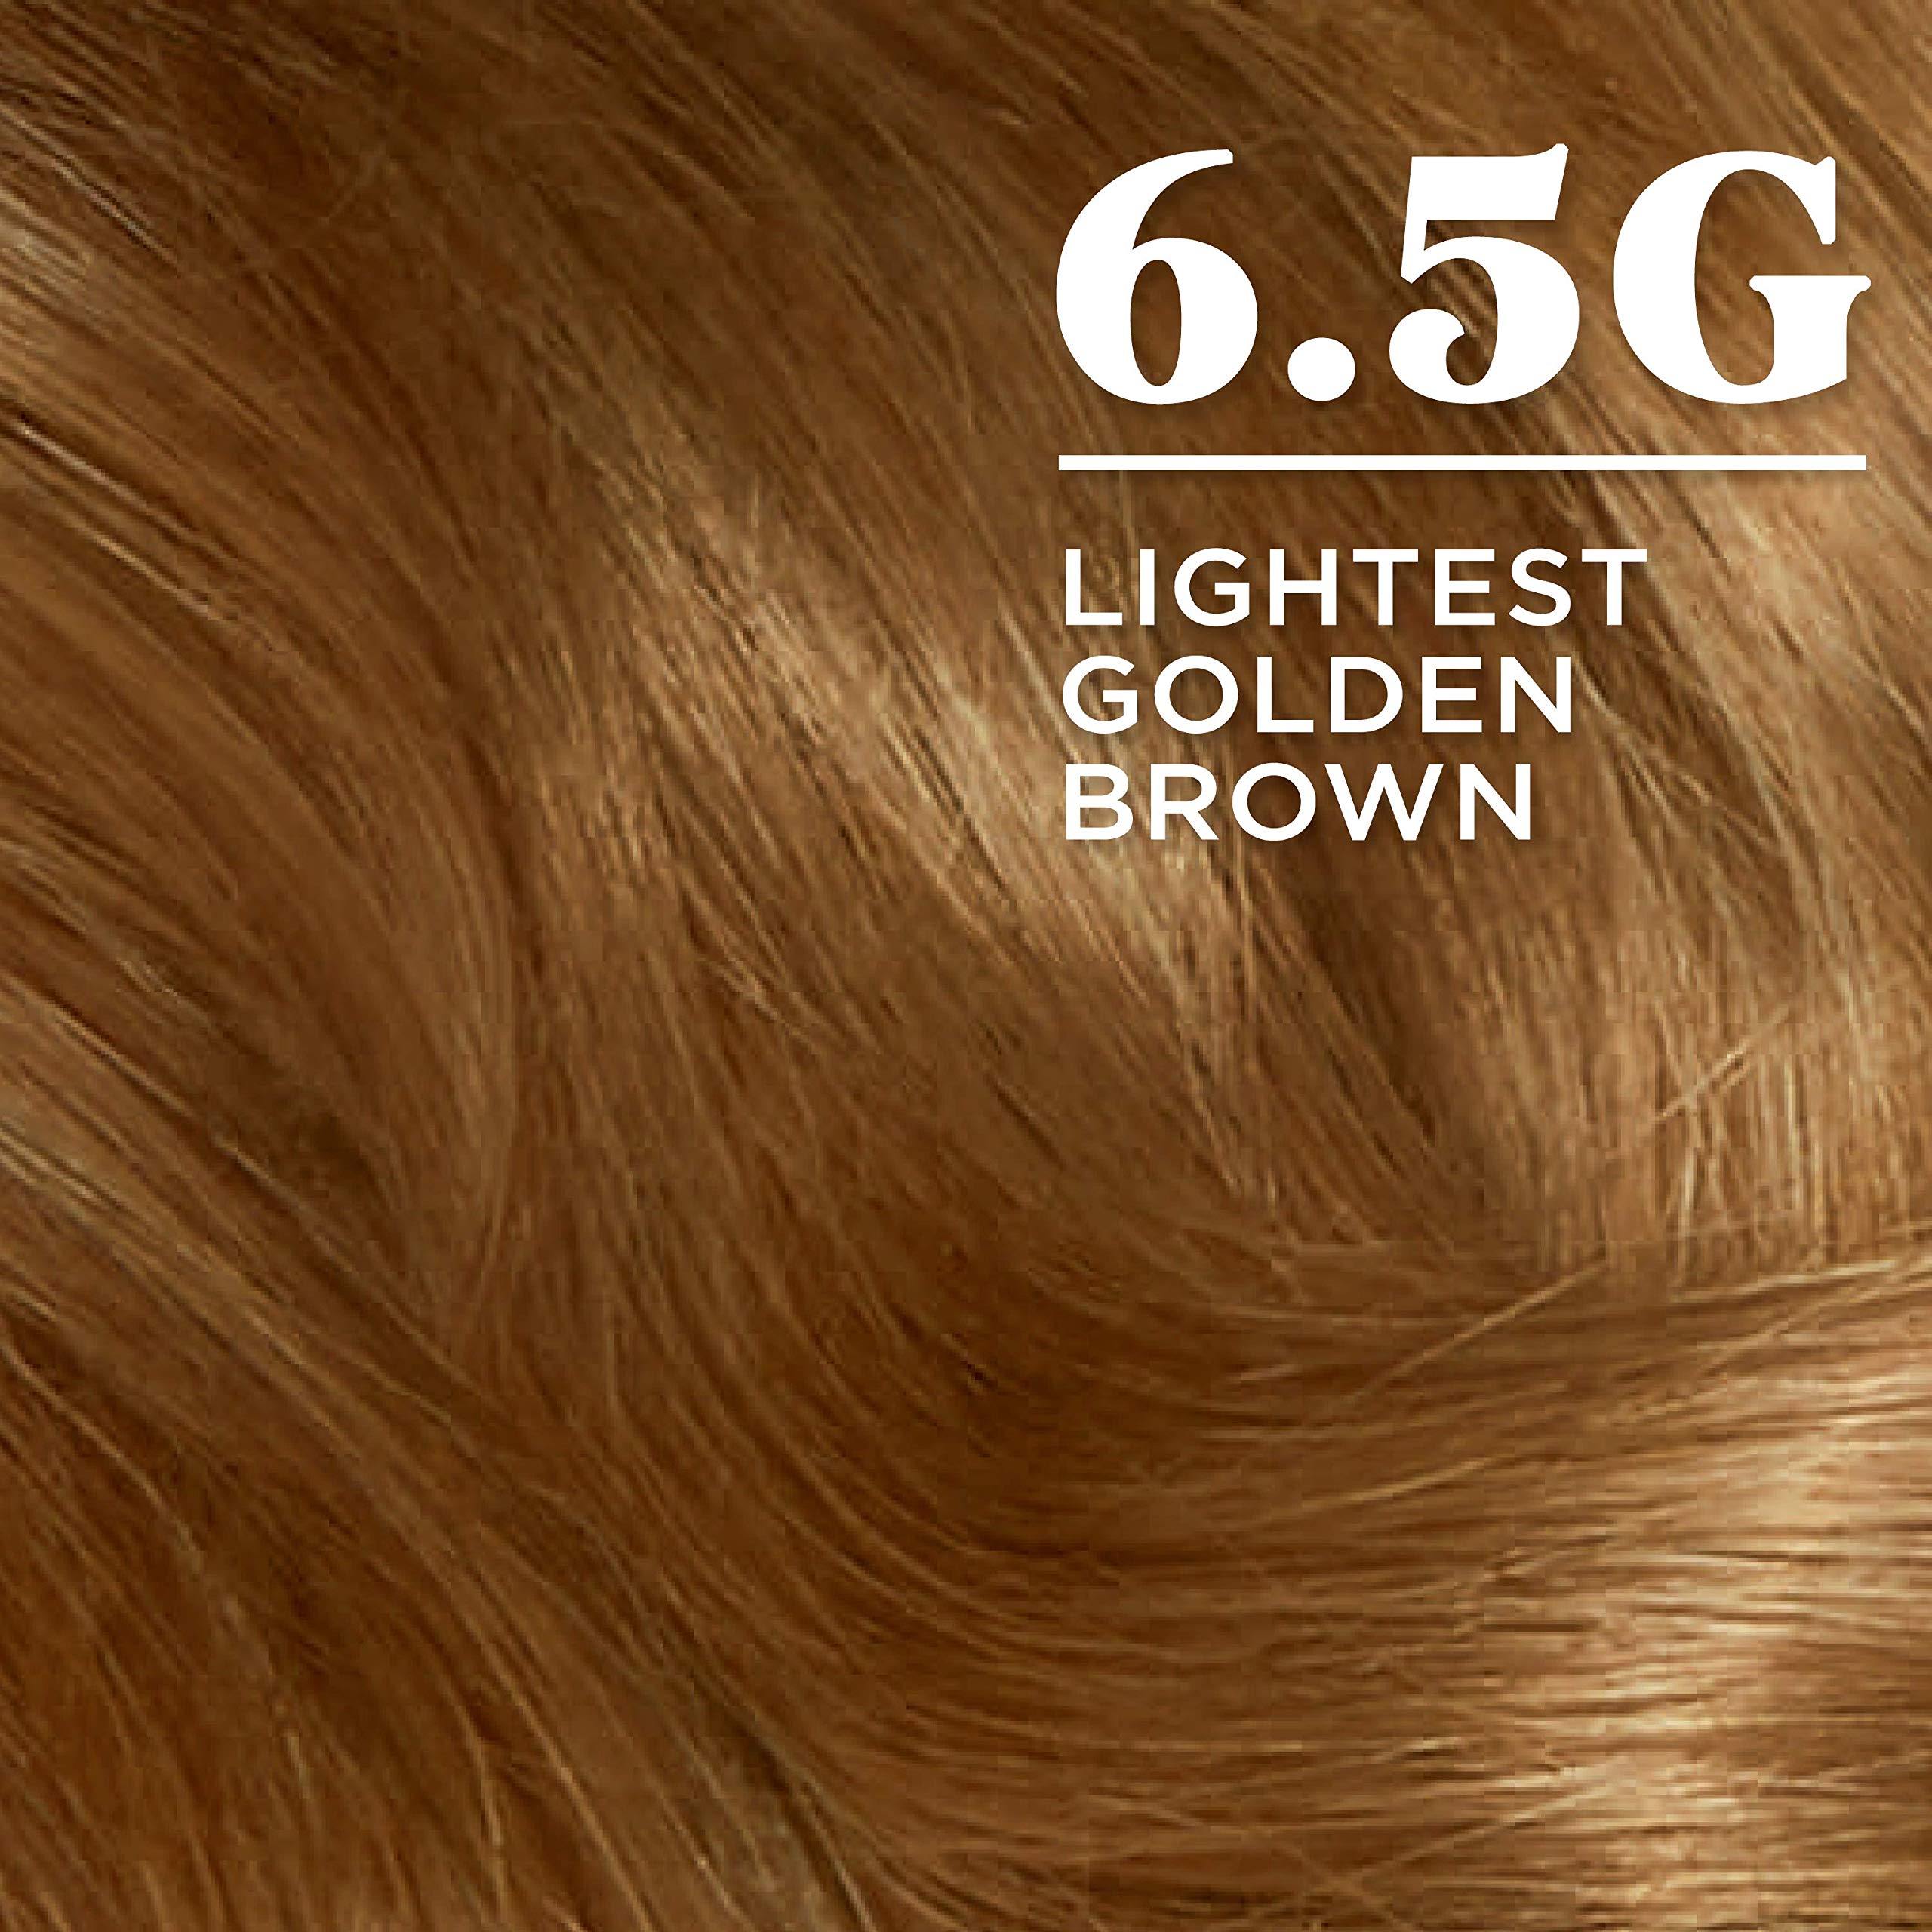 Clairol Nice'n Easy Permanent Hair Dye, 6.5G Lightest Golden Brown Hair Color, (Pack of 3)